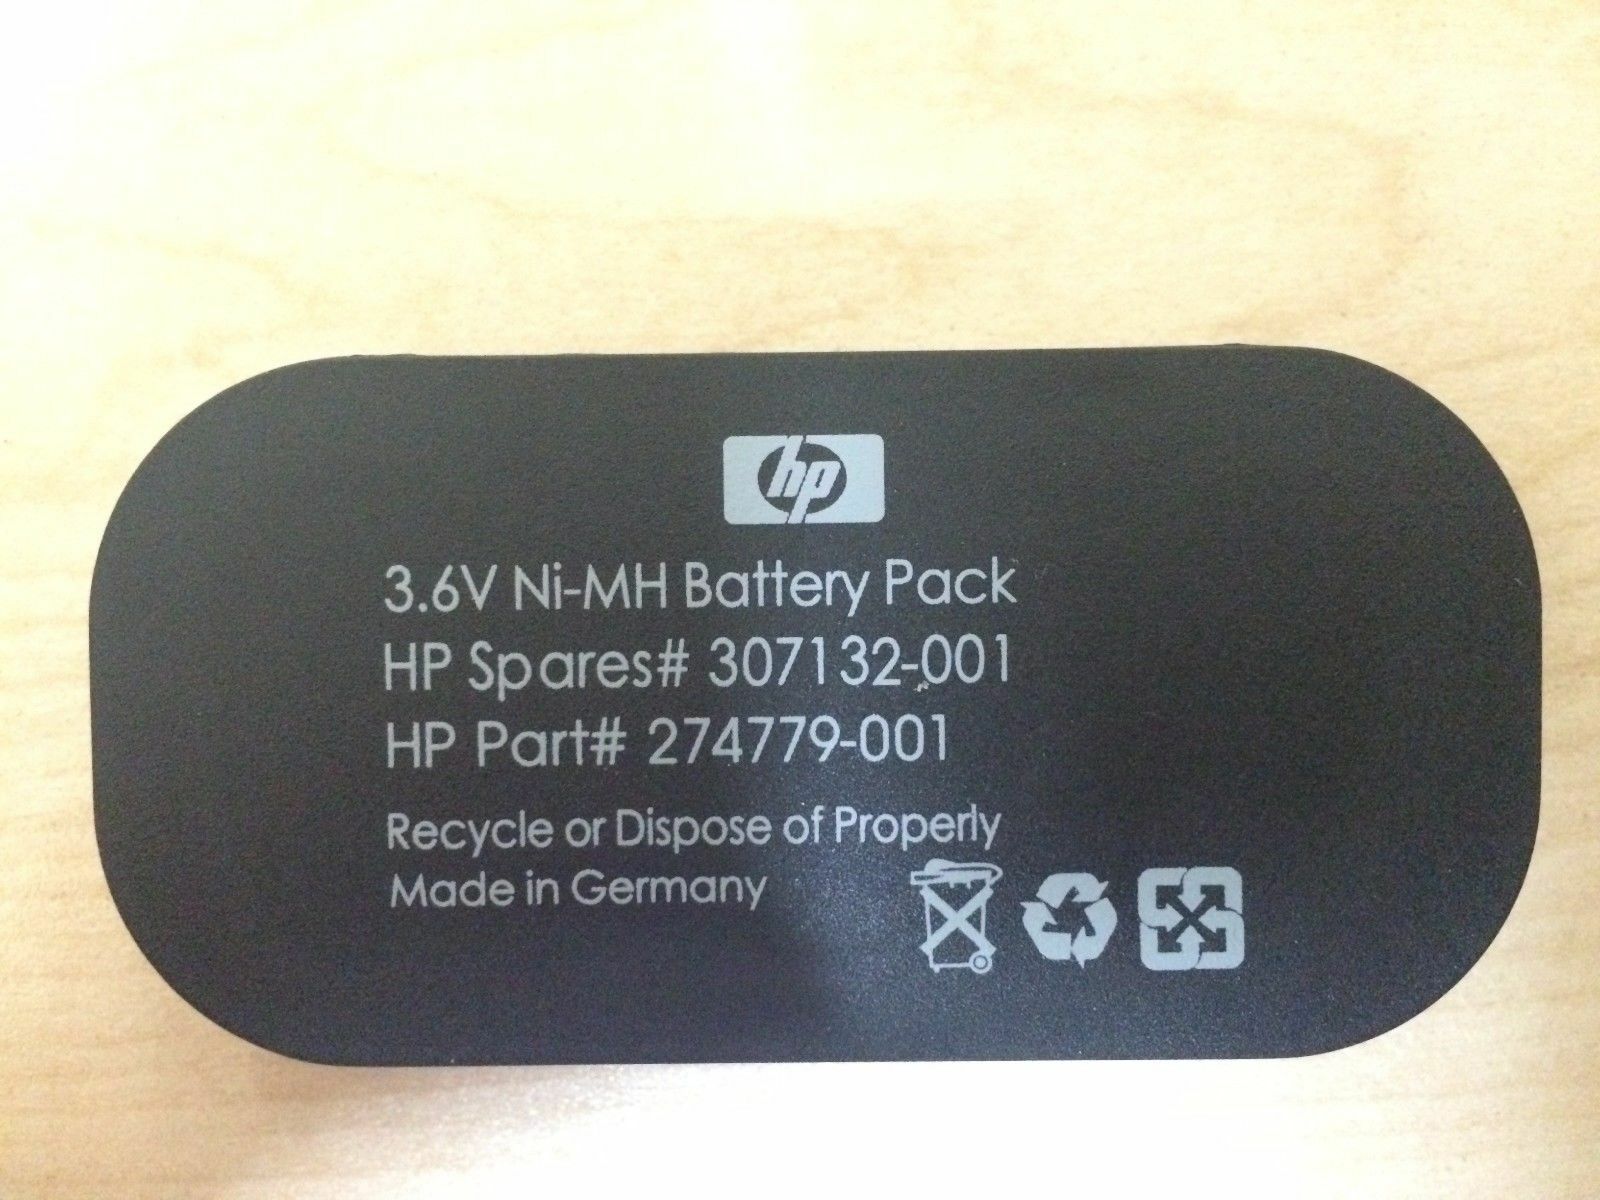 Hp 307132-001 274779-001 Battery Pack Ni-mh 3.6v